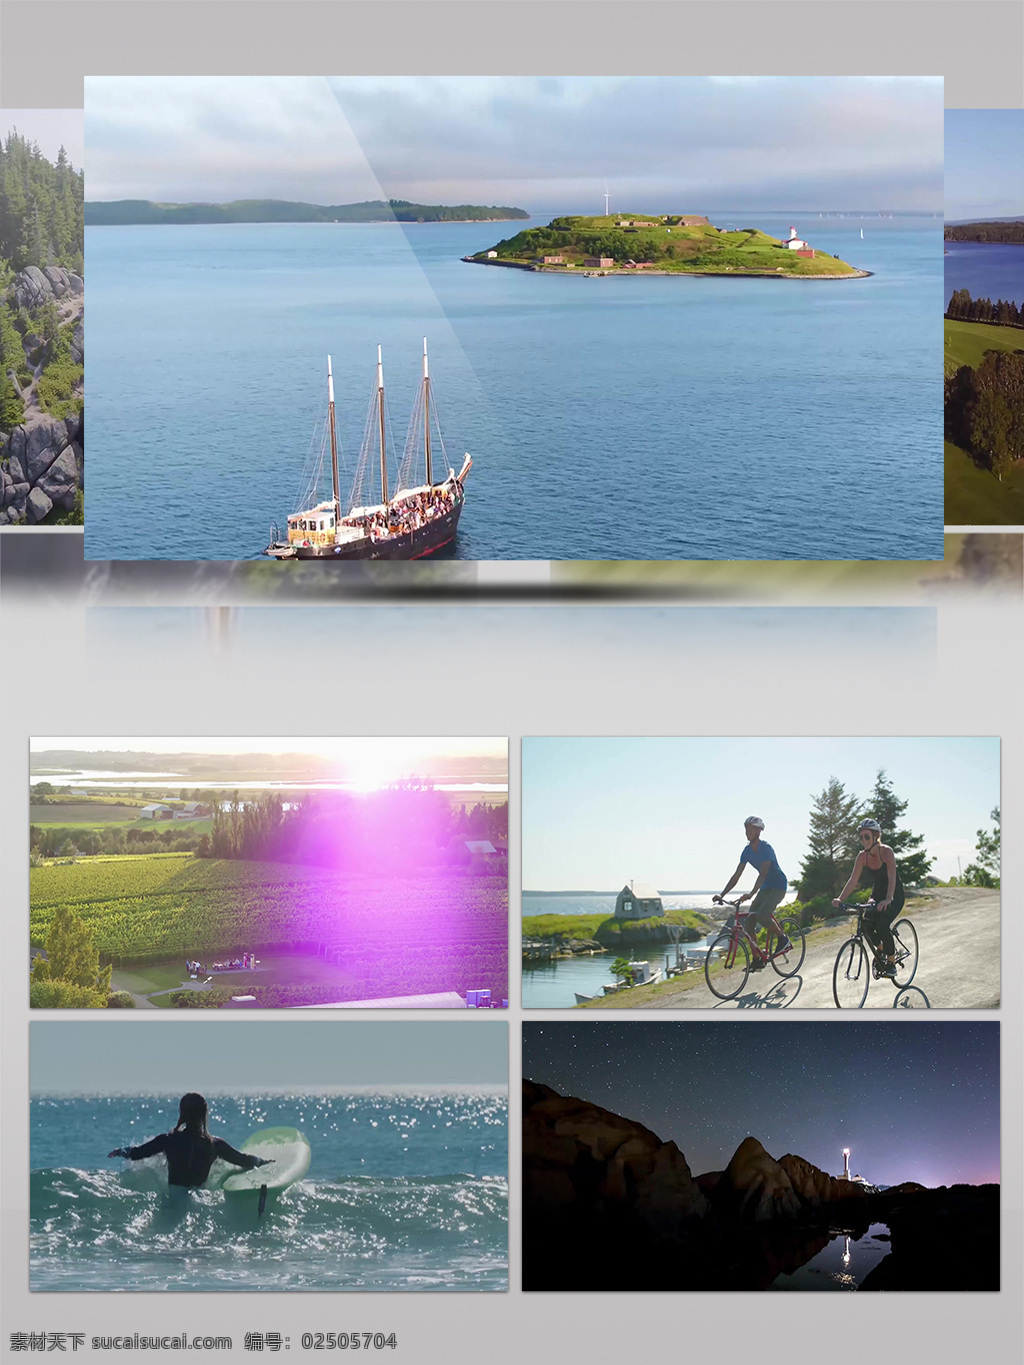 4k 美丽 加拿大 东海岸 新斯科舍 旅游 冲浪 夏日 唯美 浪漫 魅力 度假 观光 骑行 游船 风光